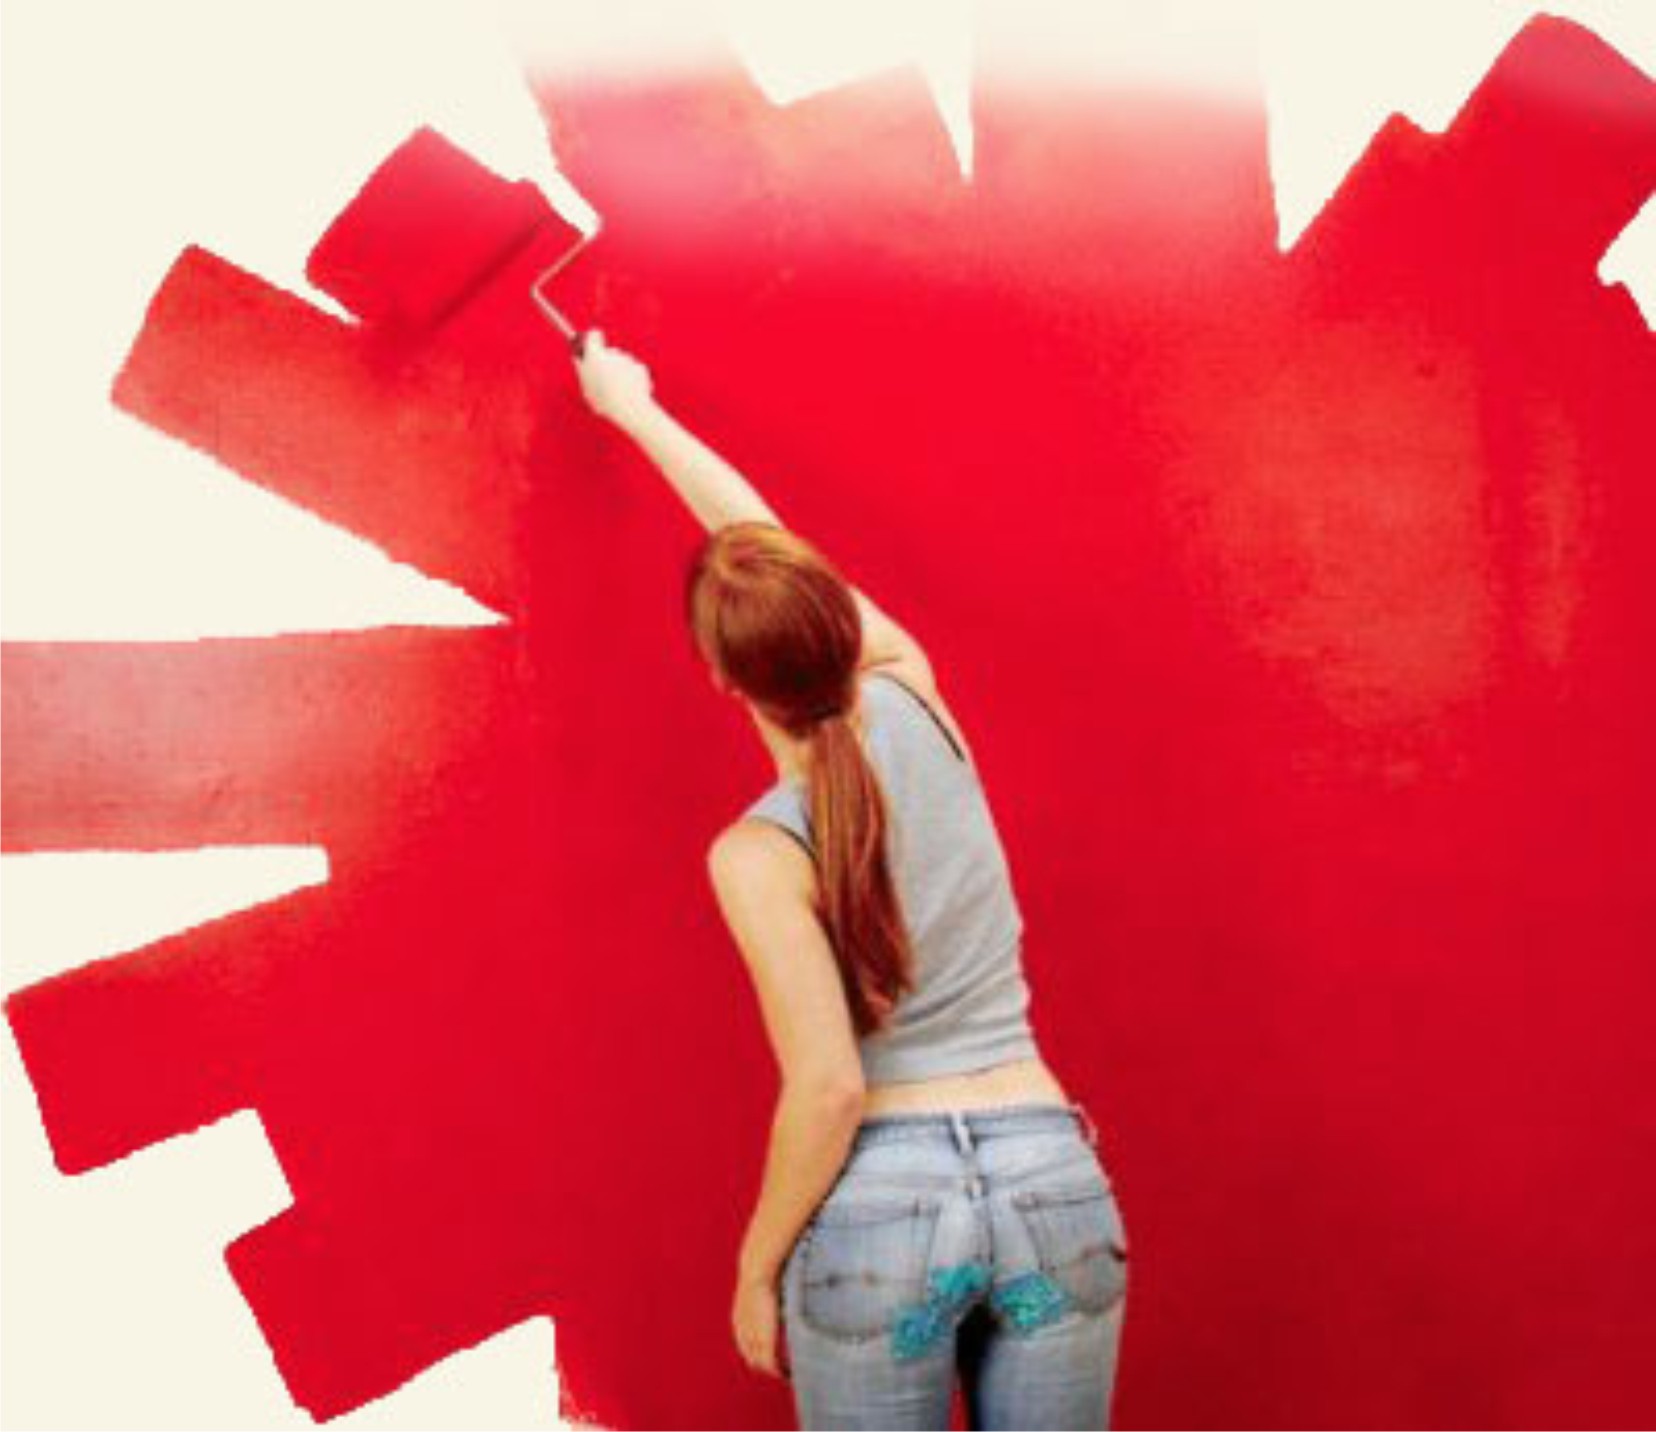 Воняет стена. Девушка красит стену. Запах ремонта. Запах краски. Картинка упертый человек под покраску.